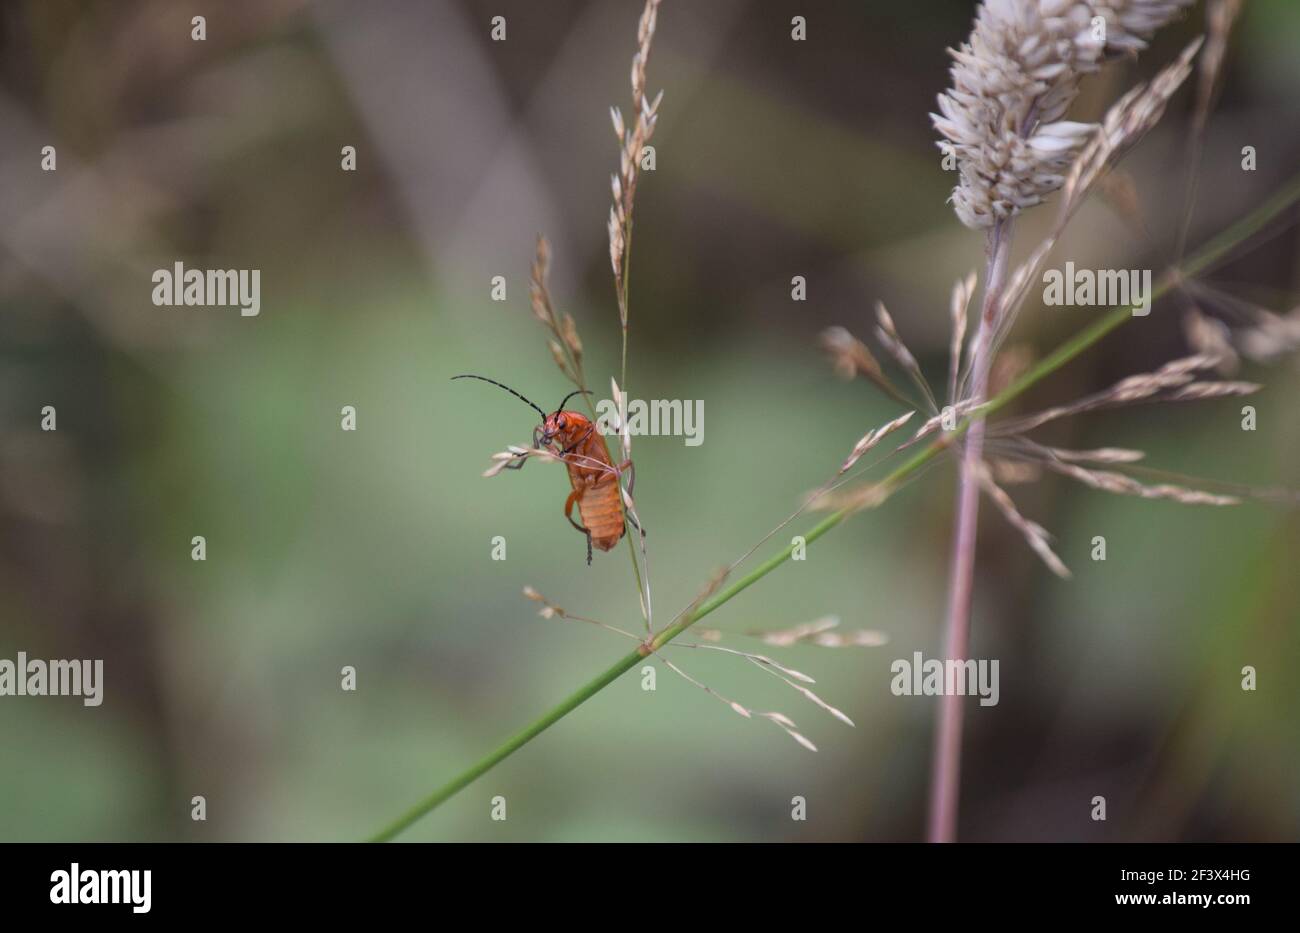 Cardinal Beetle on Grass Stock Photo